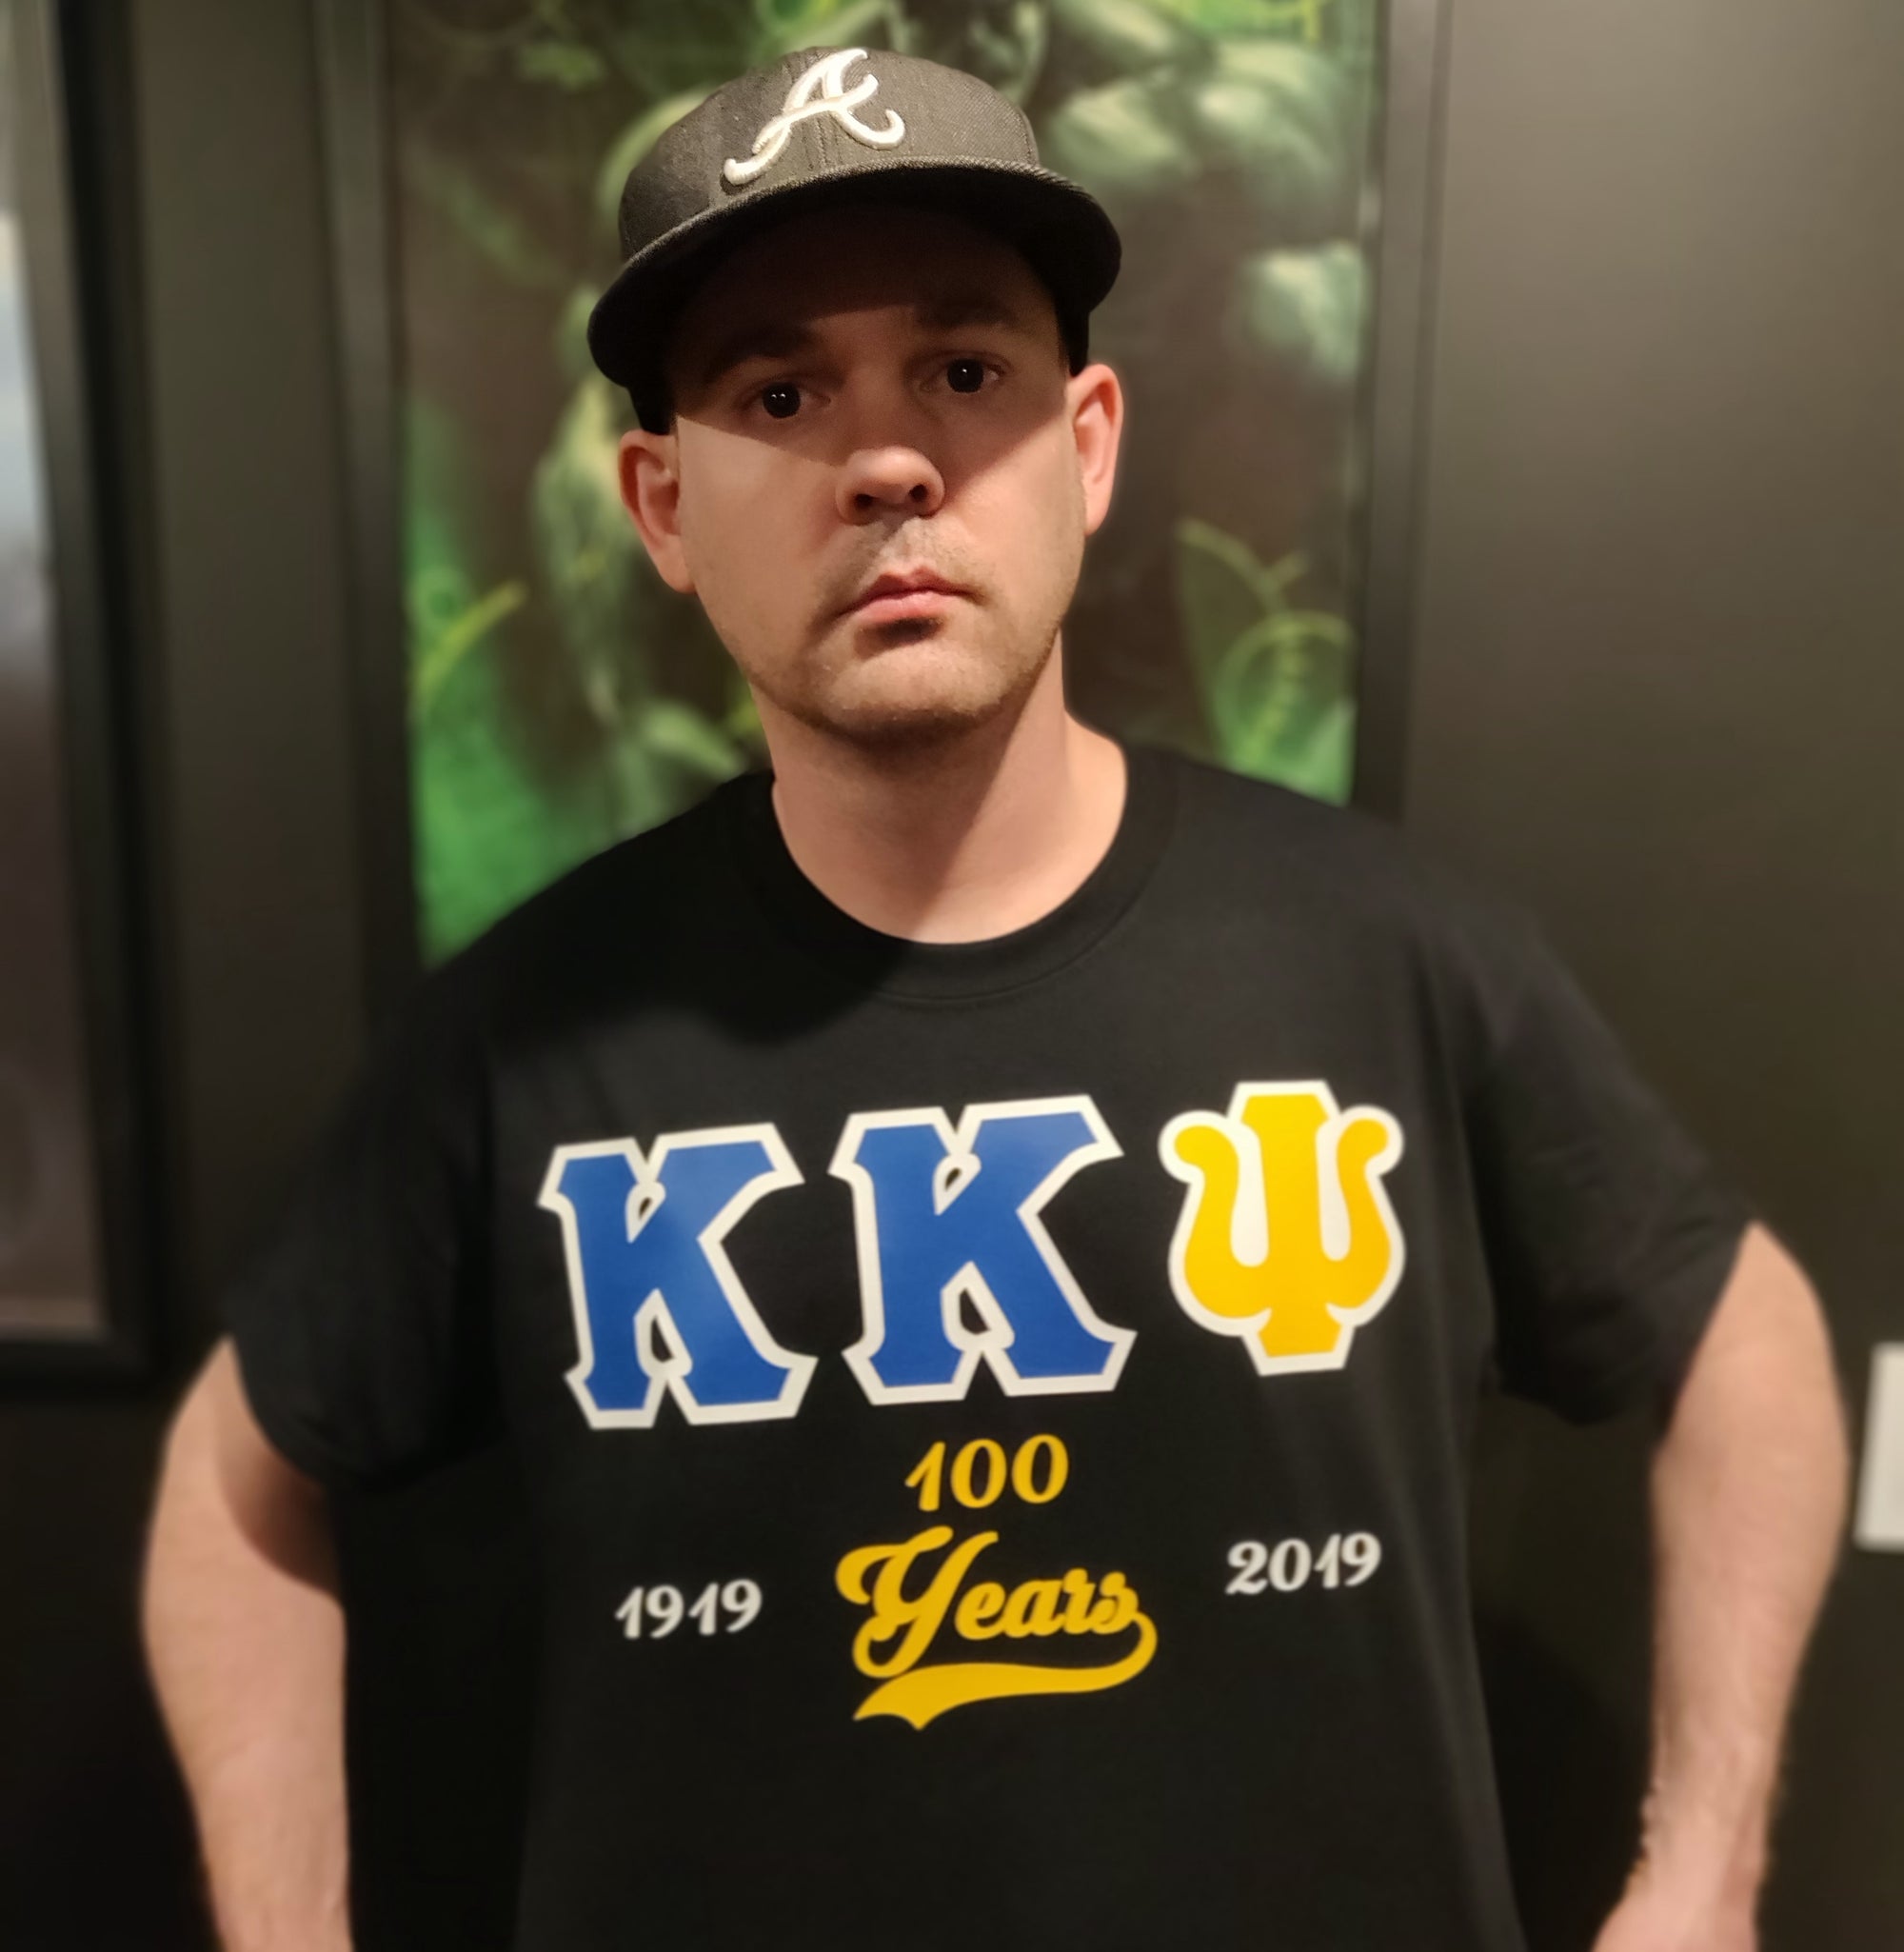 Kappa Kappa Psi - 100 Years - T-Shirt